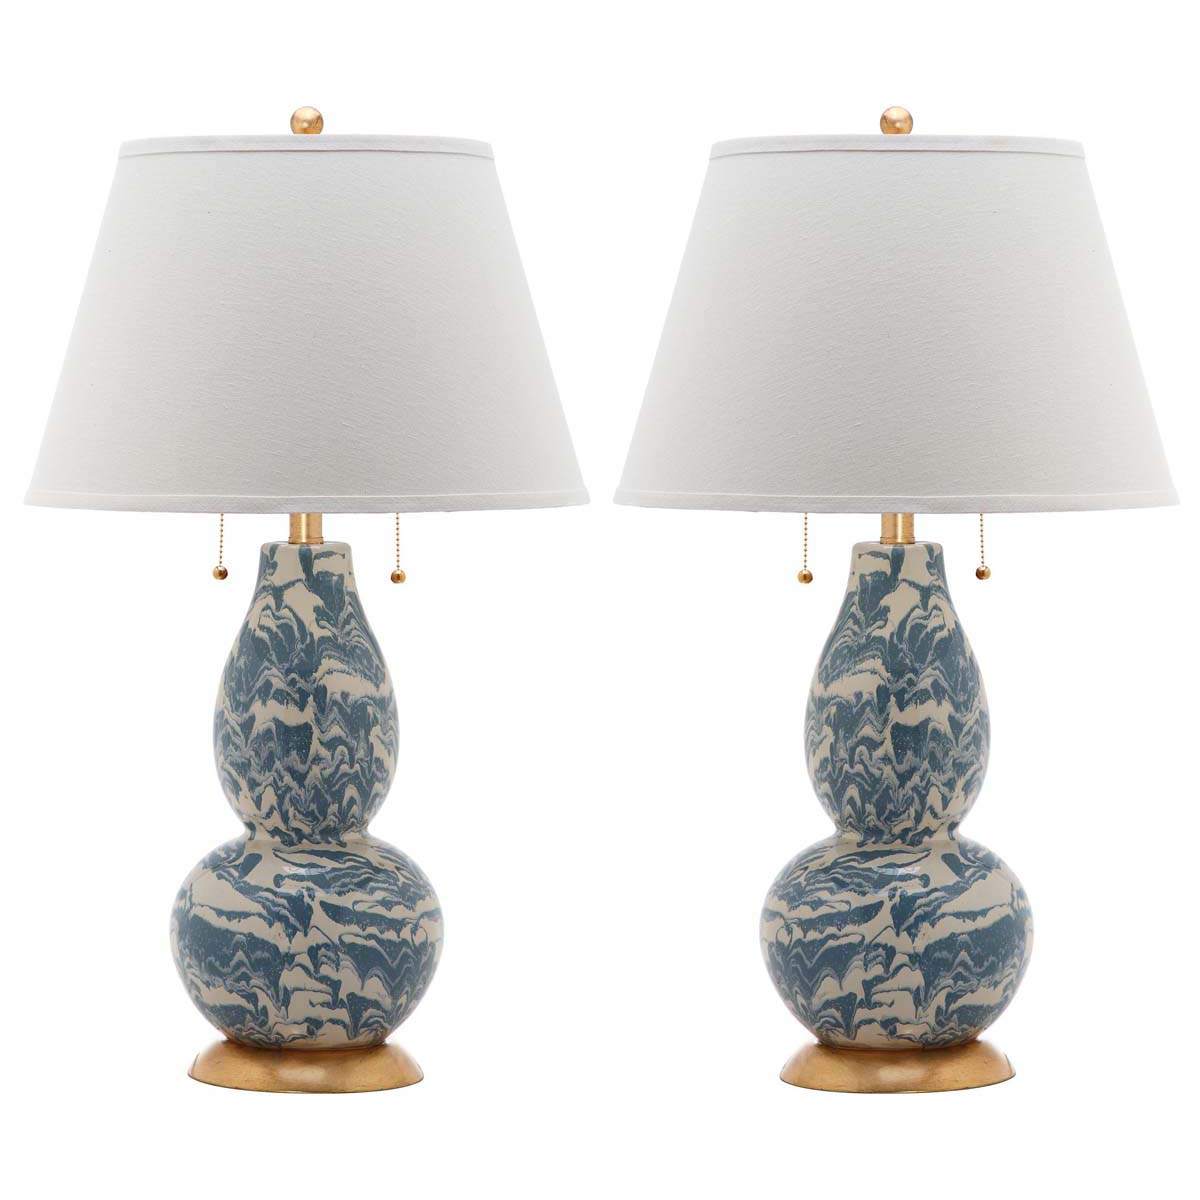 Safavieh Color Swirls 28 Inch H Glass Table Lamp, LIT4159 - Light Blue/White (Set of 2)